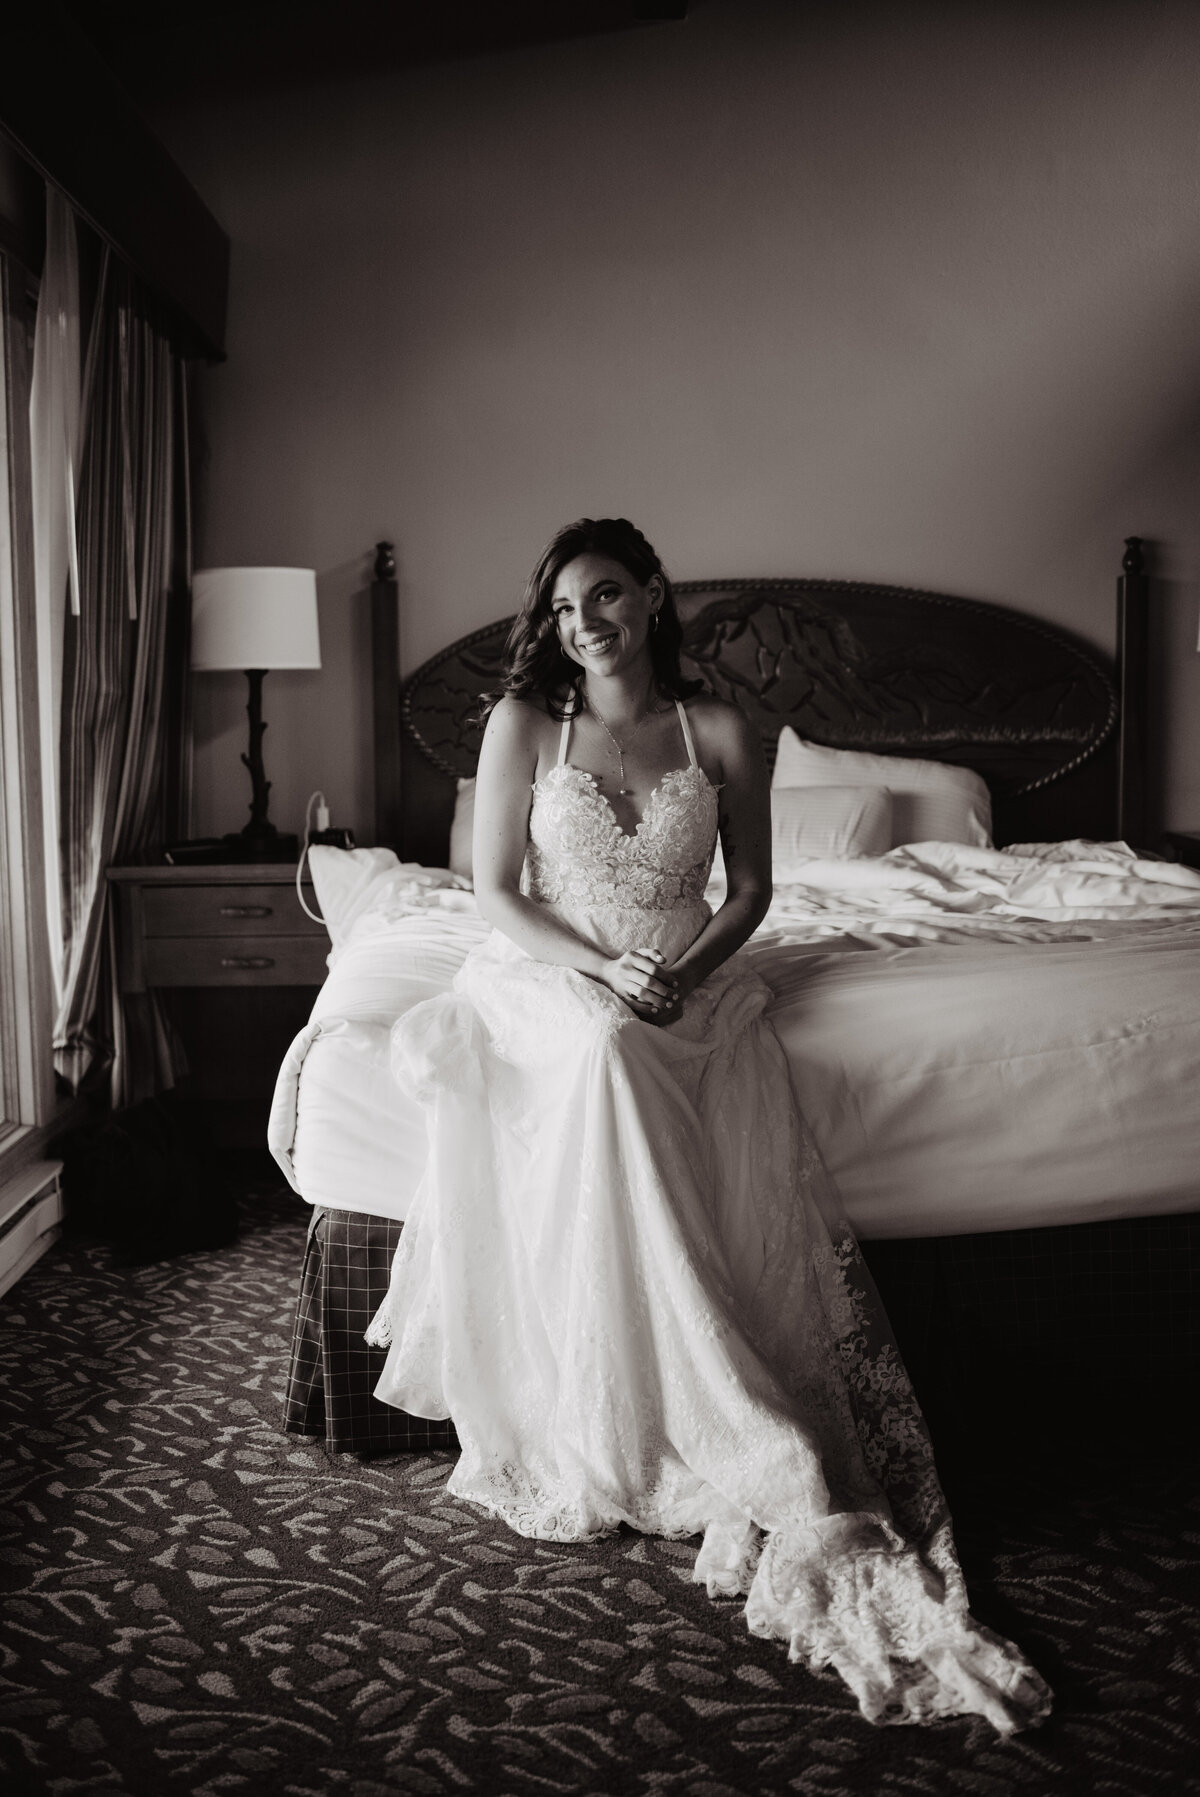 Jackson Hole Photographers capture bride sitting on bed wearing wedding dress before adventure elopement